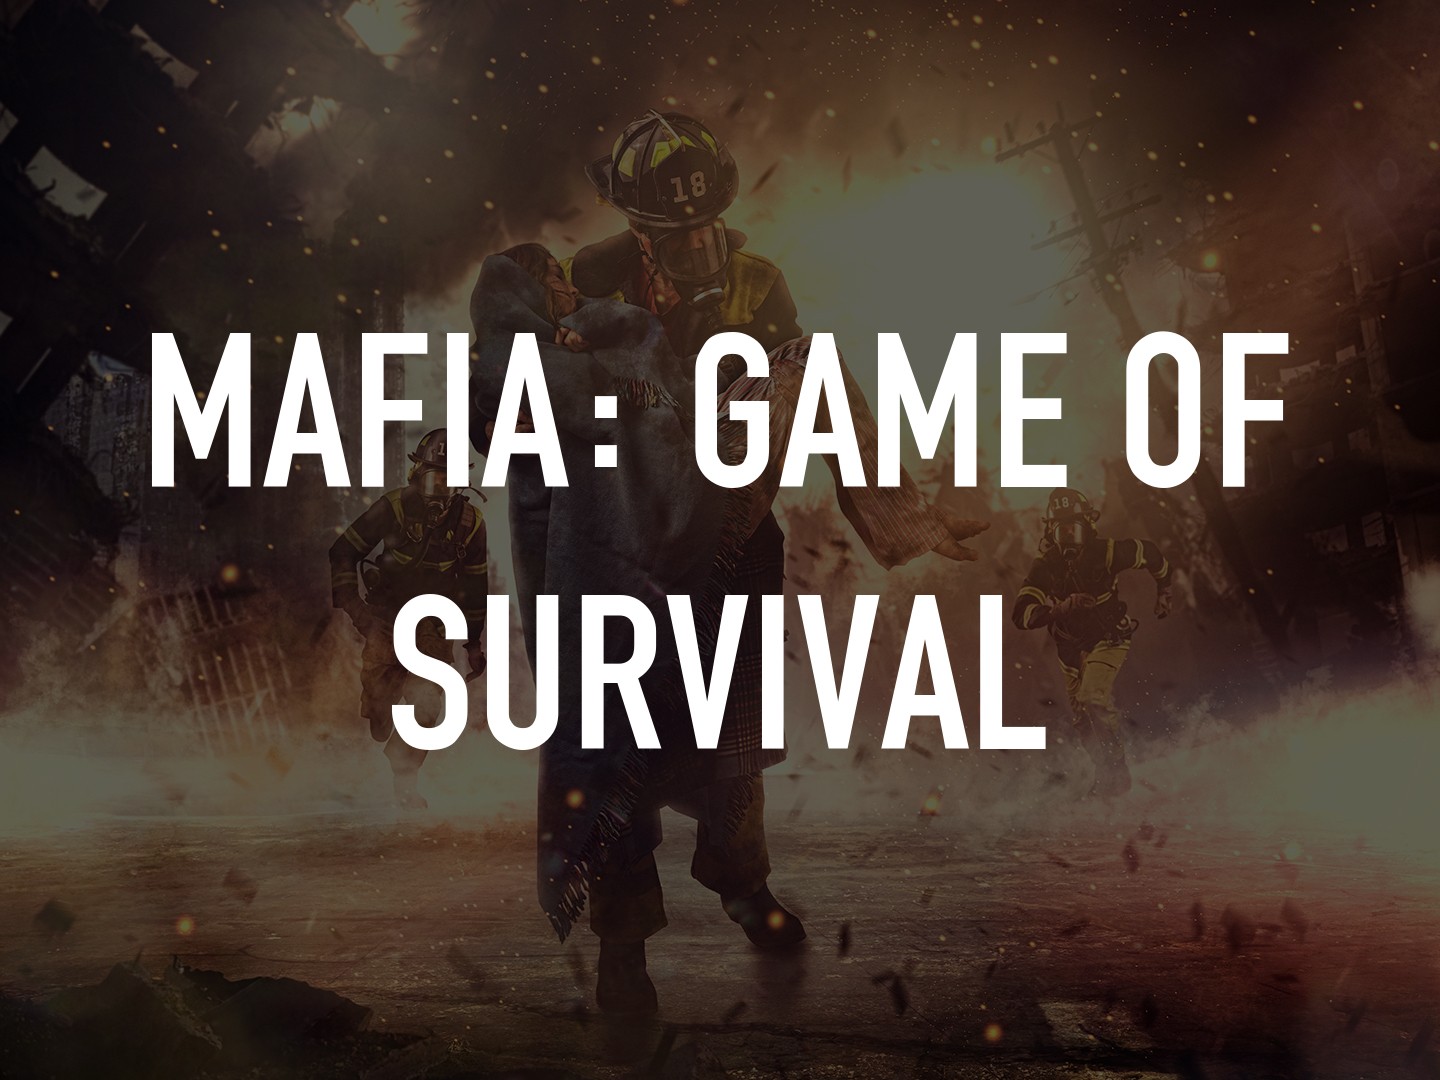 Mafia: Game of Survival (2016) - IMDb